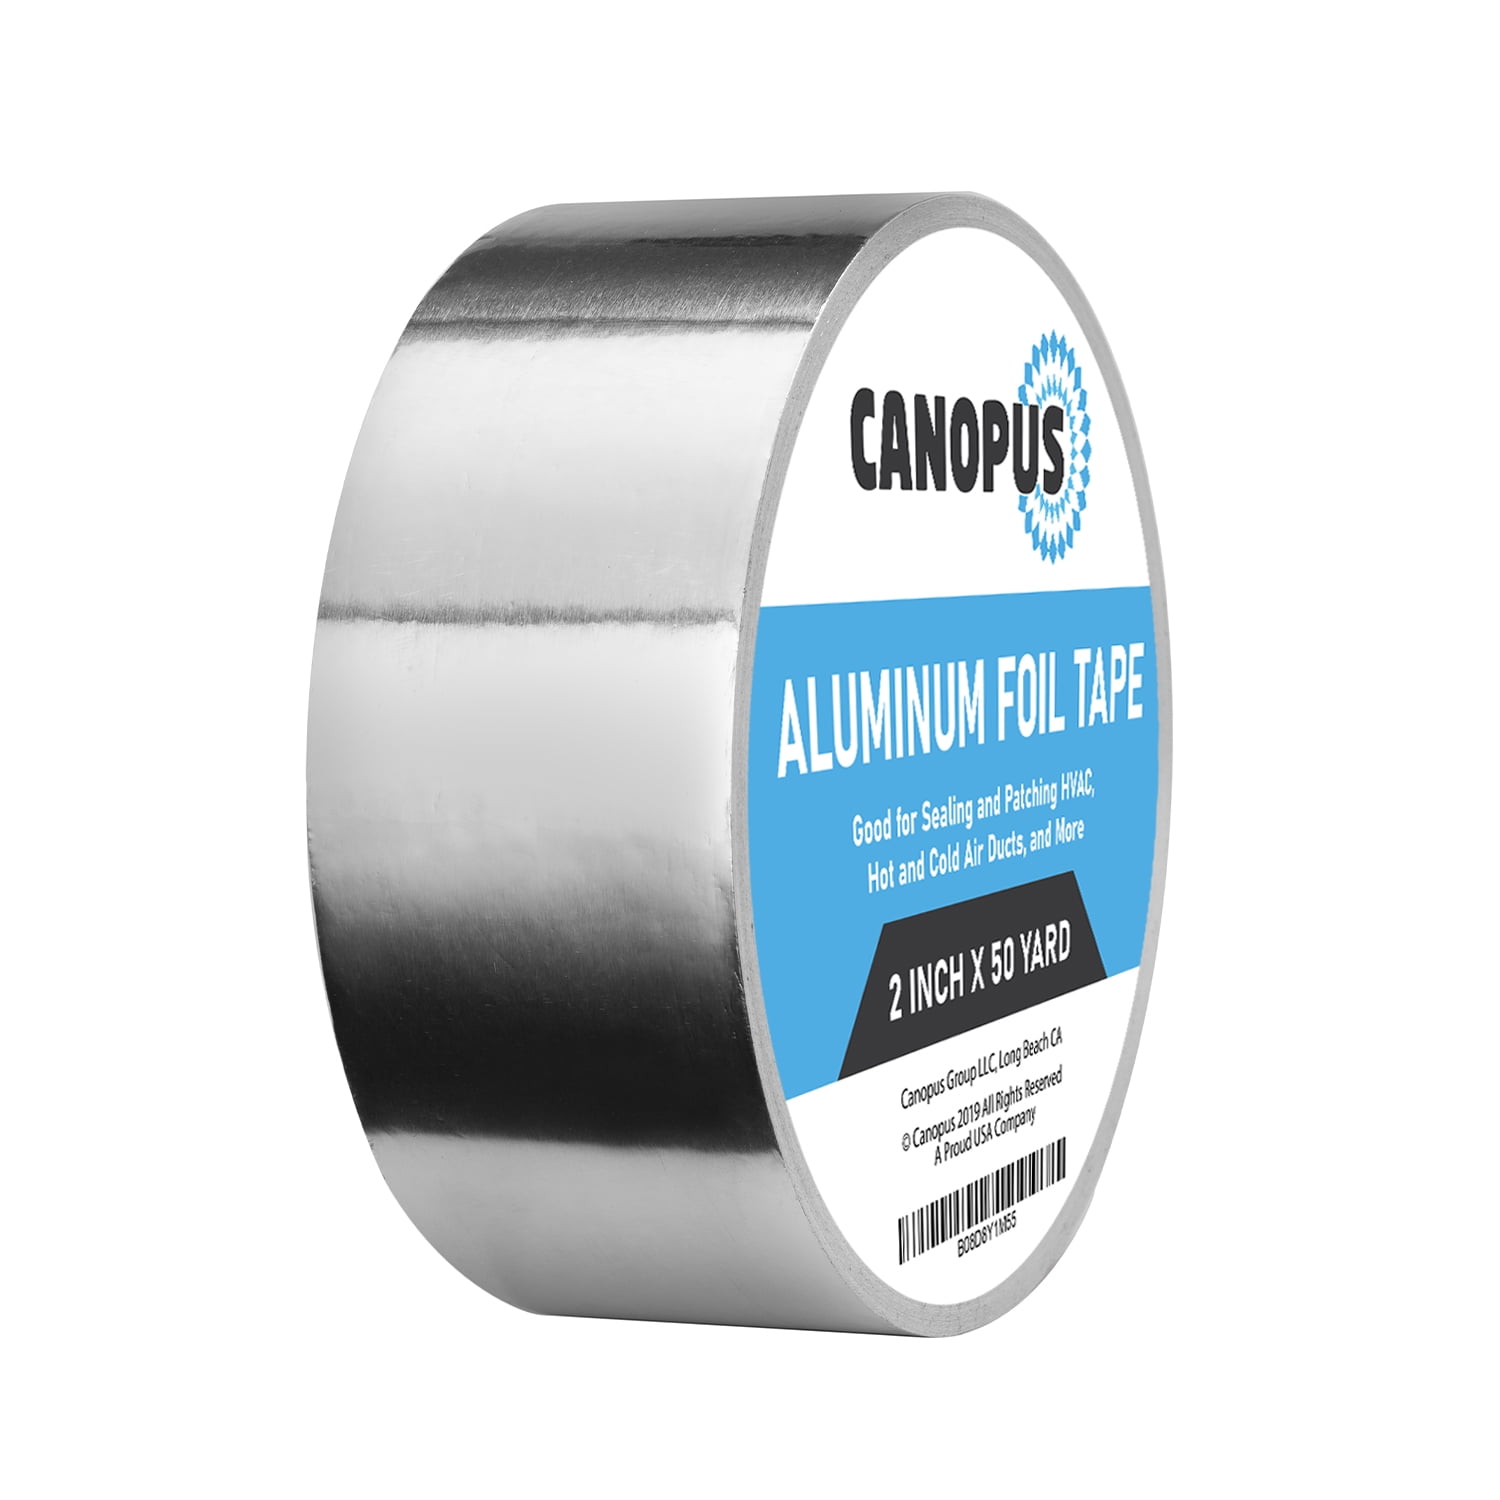 2 x 164ft Silver Aluminium Foil Tape Adhesive Sealing Heat Shield Tape for Duct Metal Repair Insulation